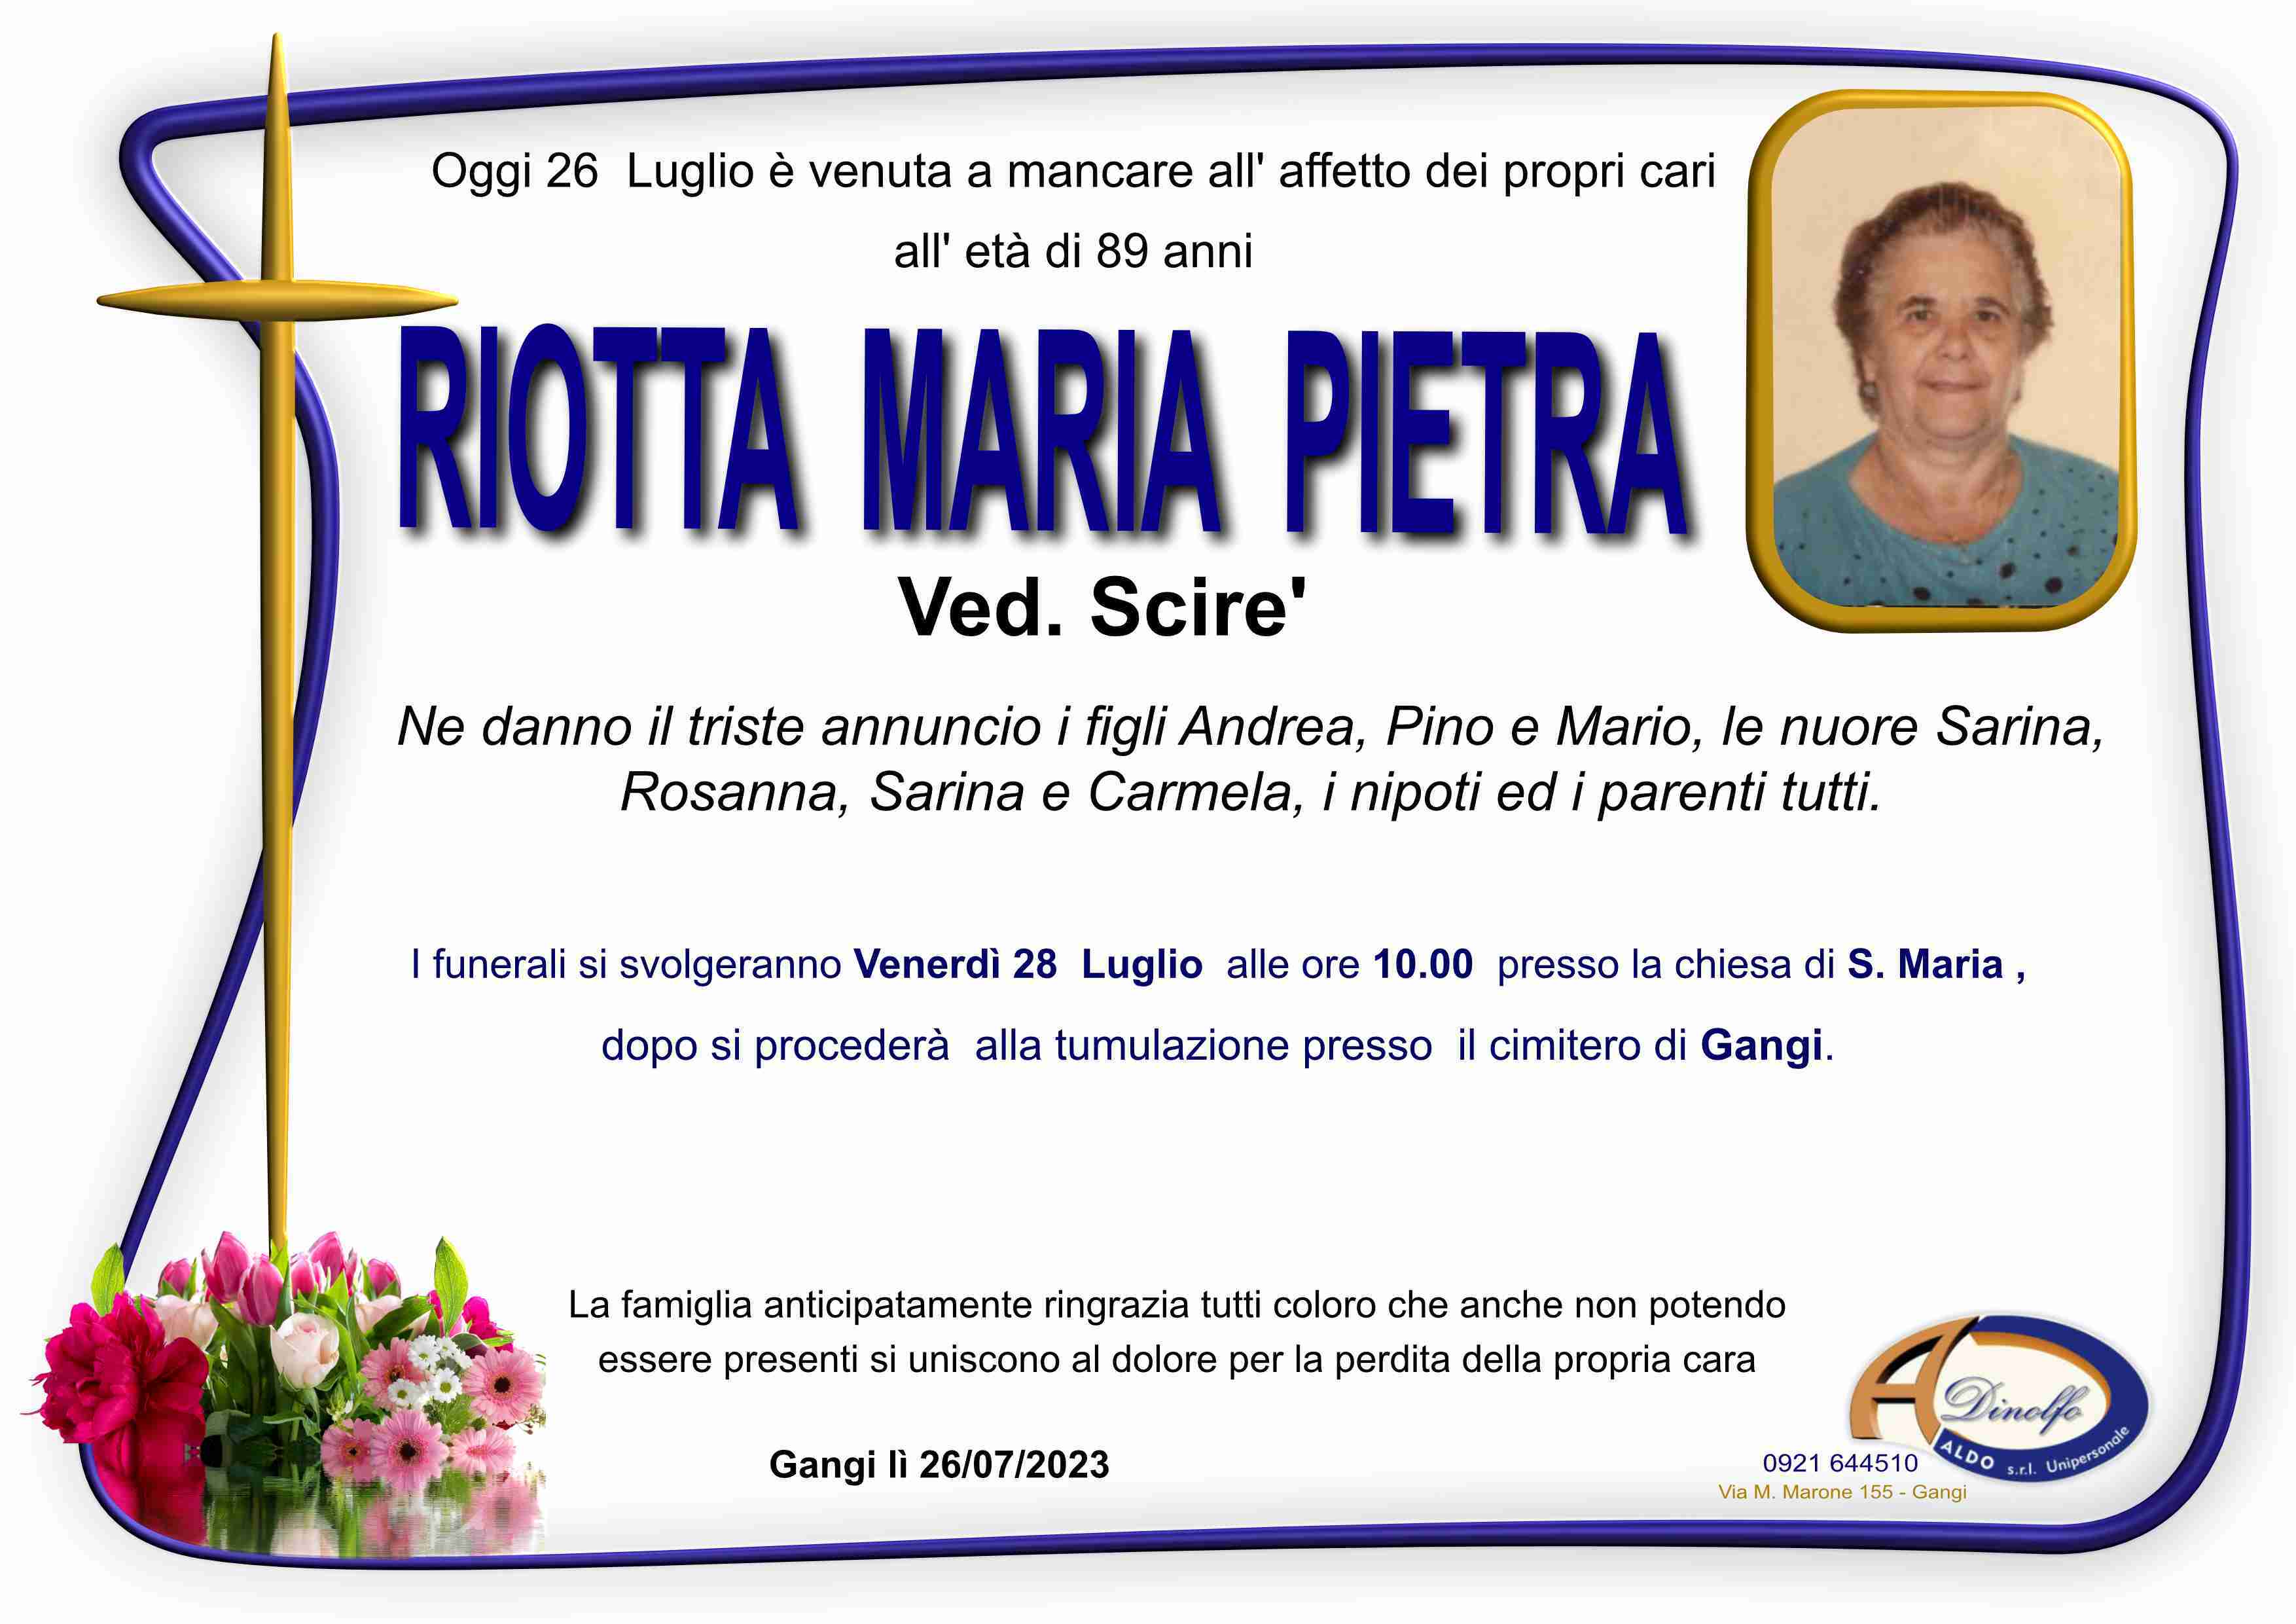 Maria Pietra Riotta